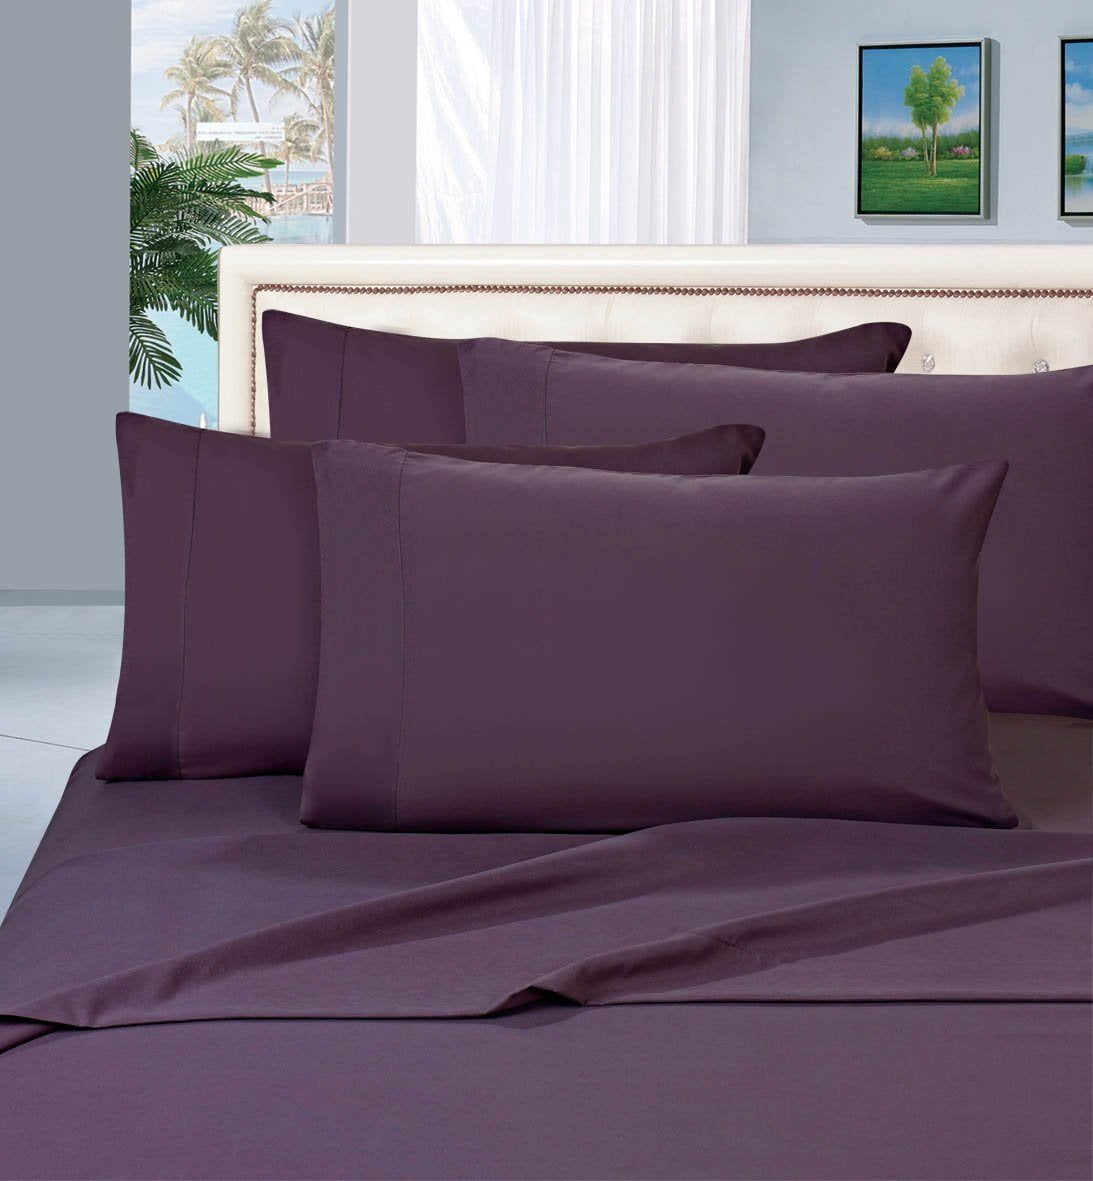 Bed Sheets – Queen Sheet Set [6-Piece, Purple] – Hotel Luxury 1800